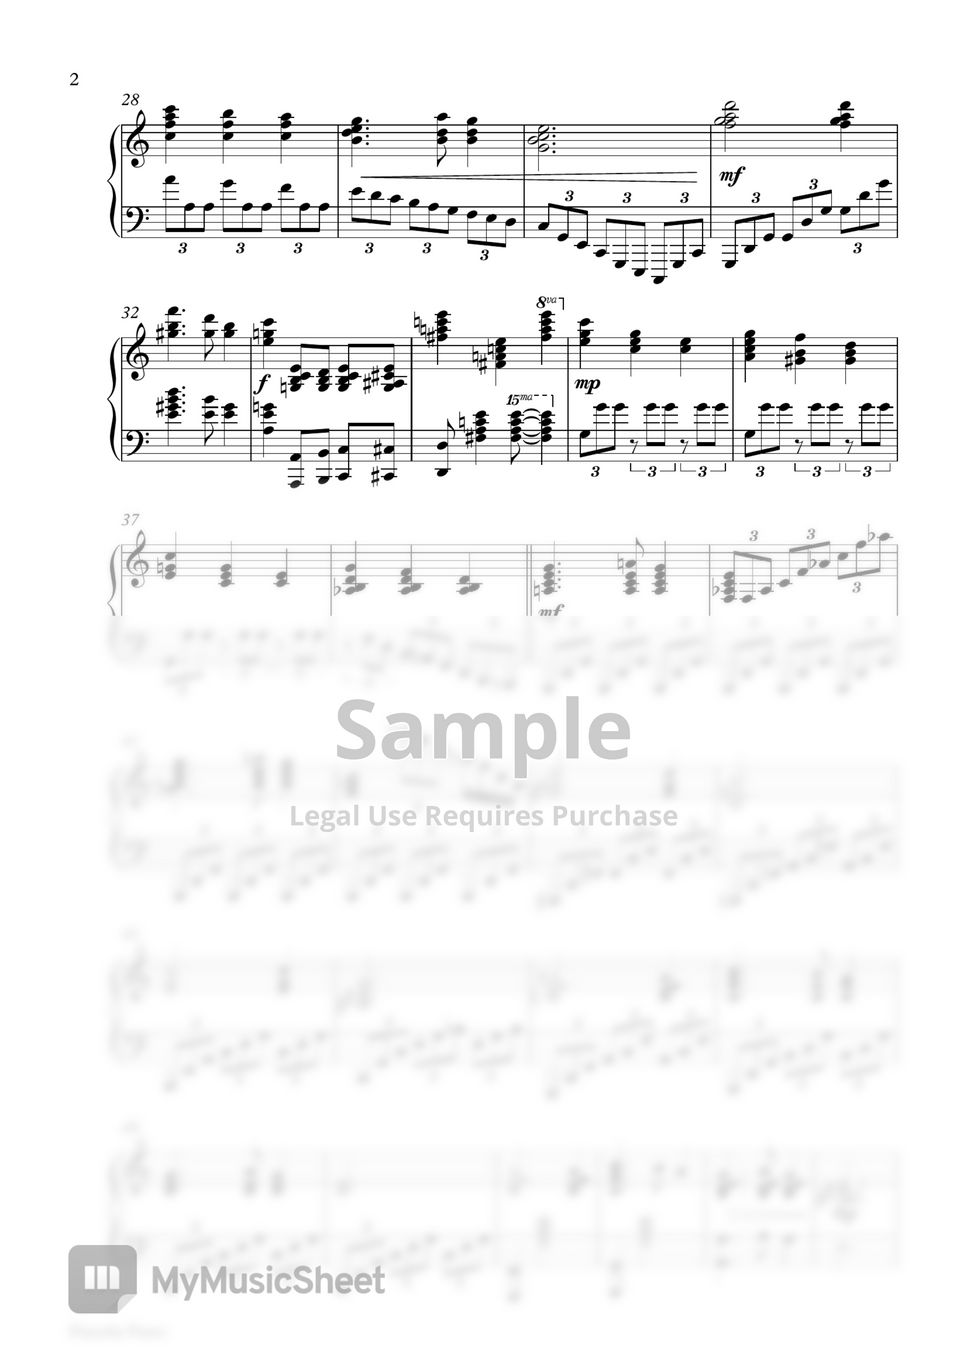 Christmas Song - SILENT NIGHT (Piano Sheet) by Pianella Piano